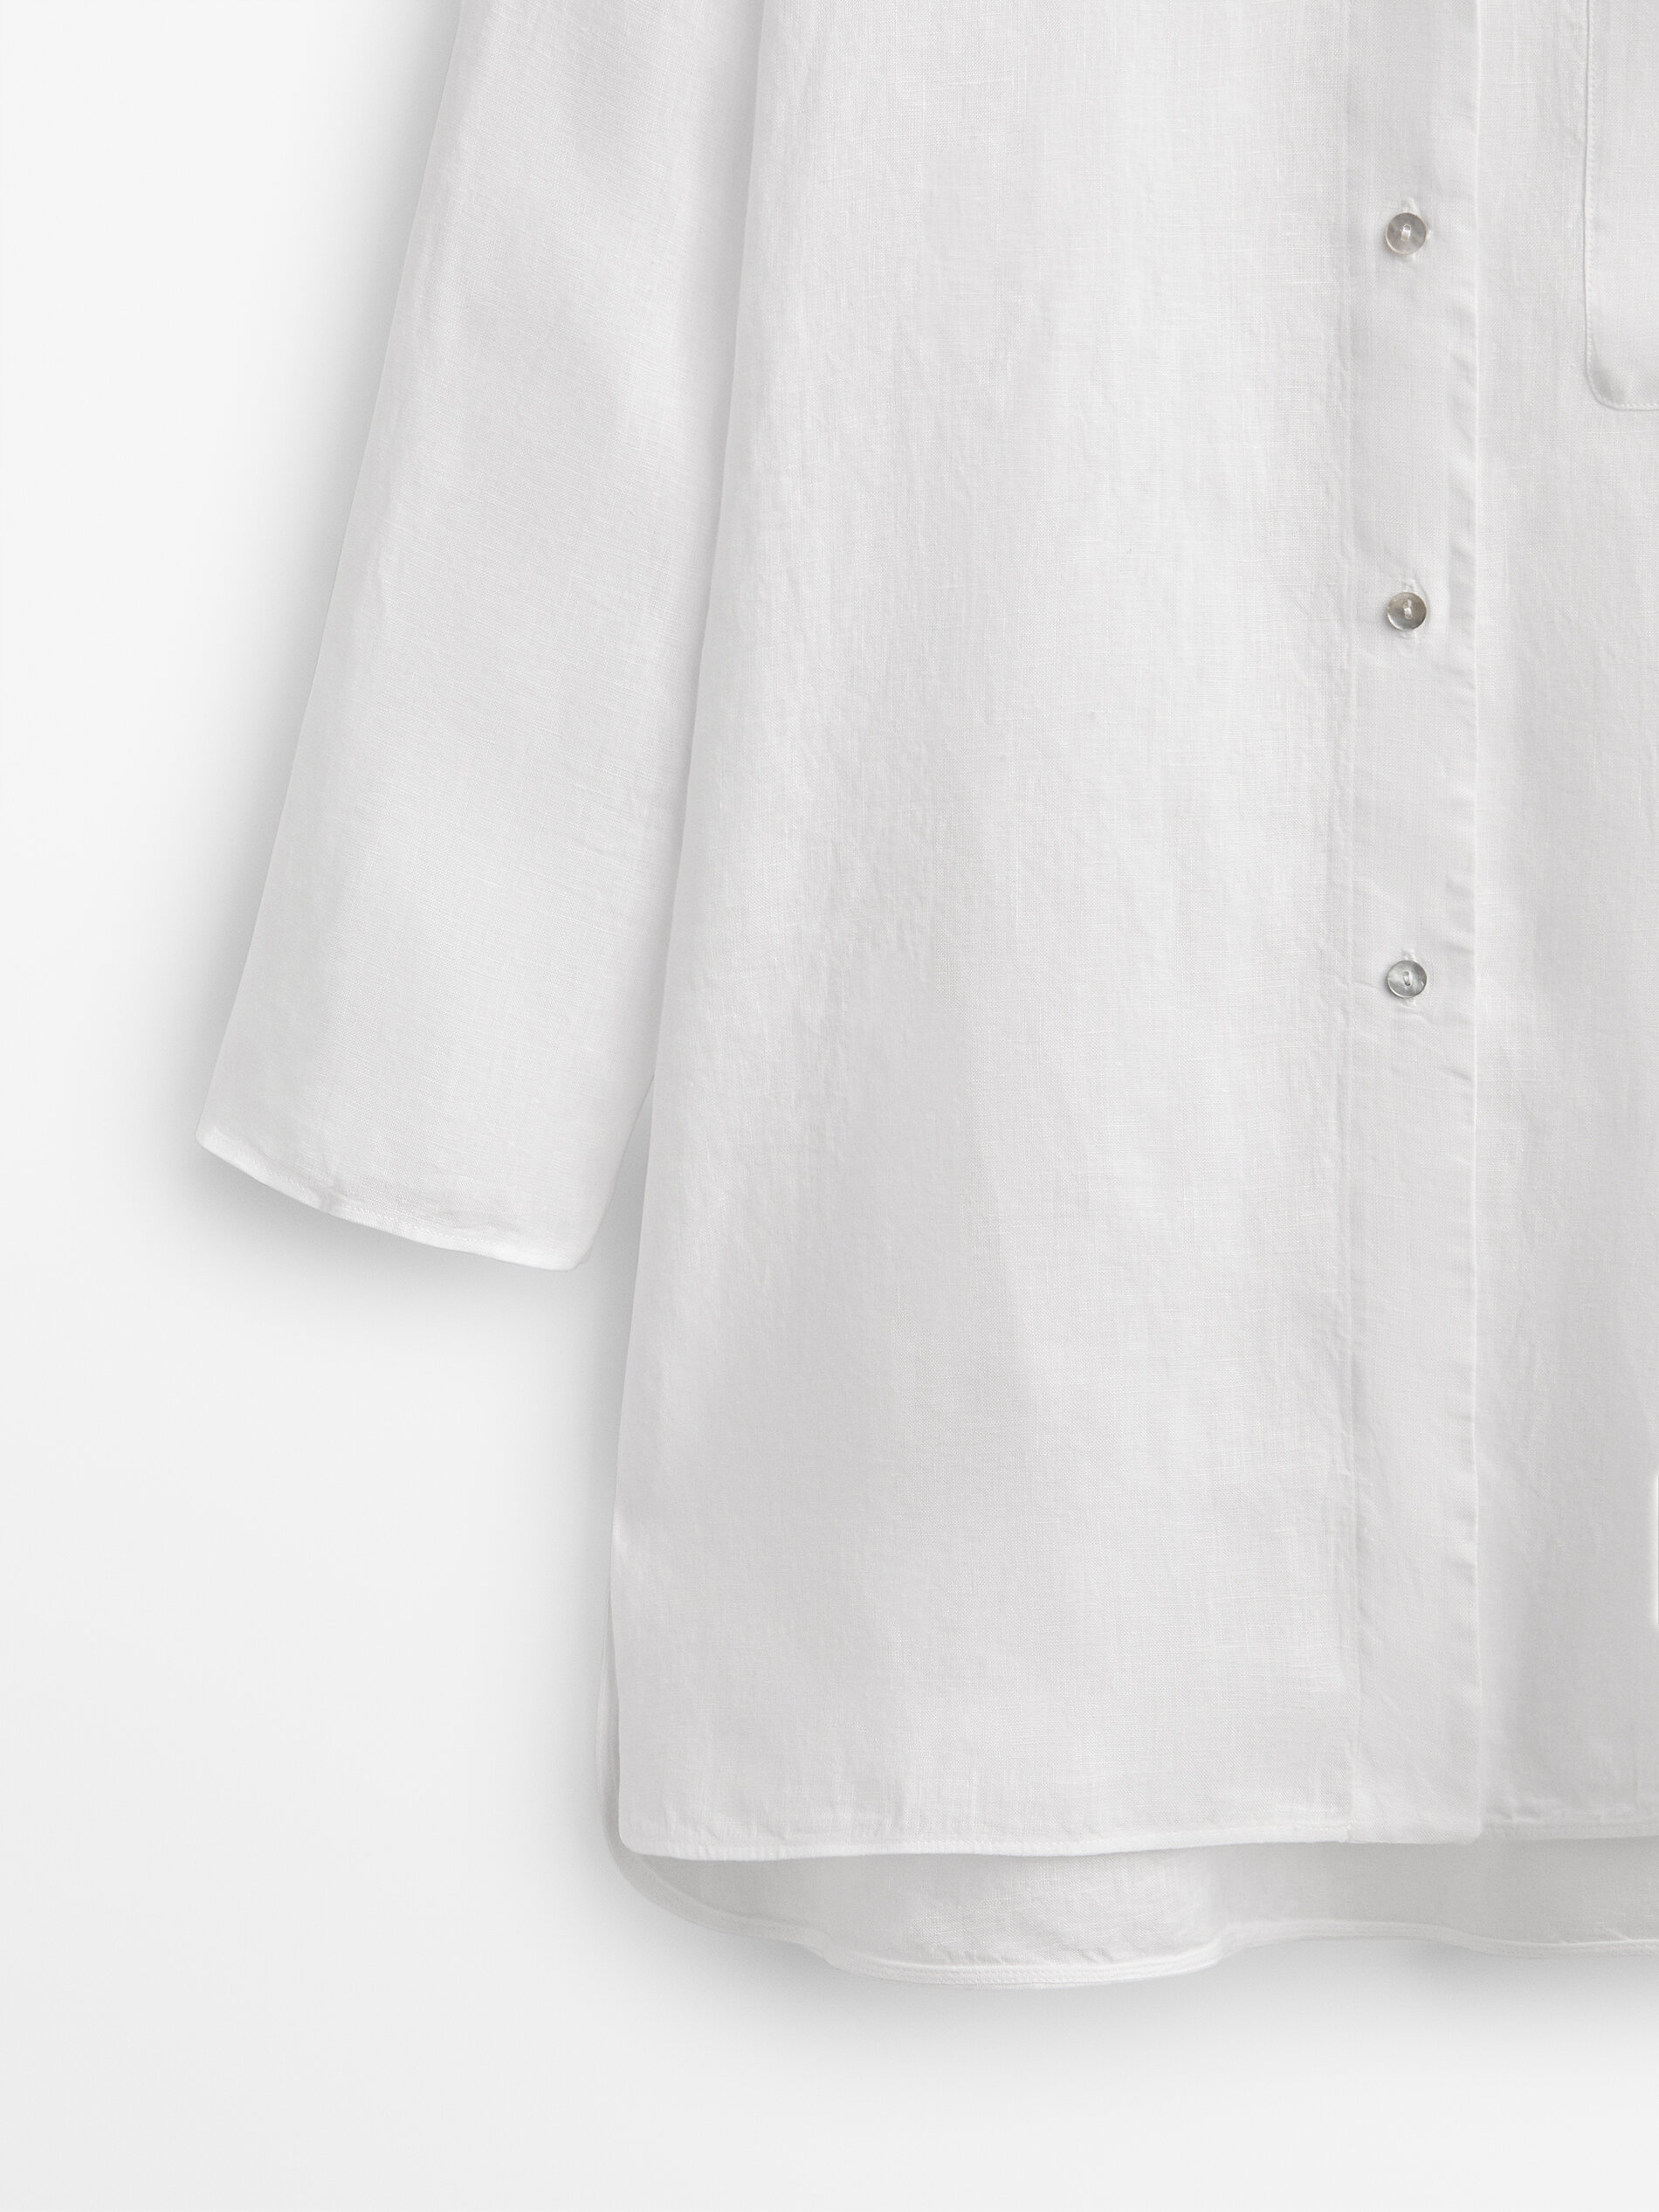 100% linen shirt with pocket